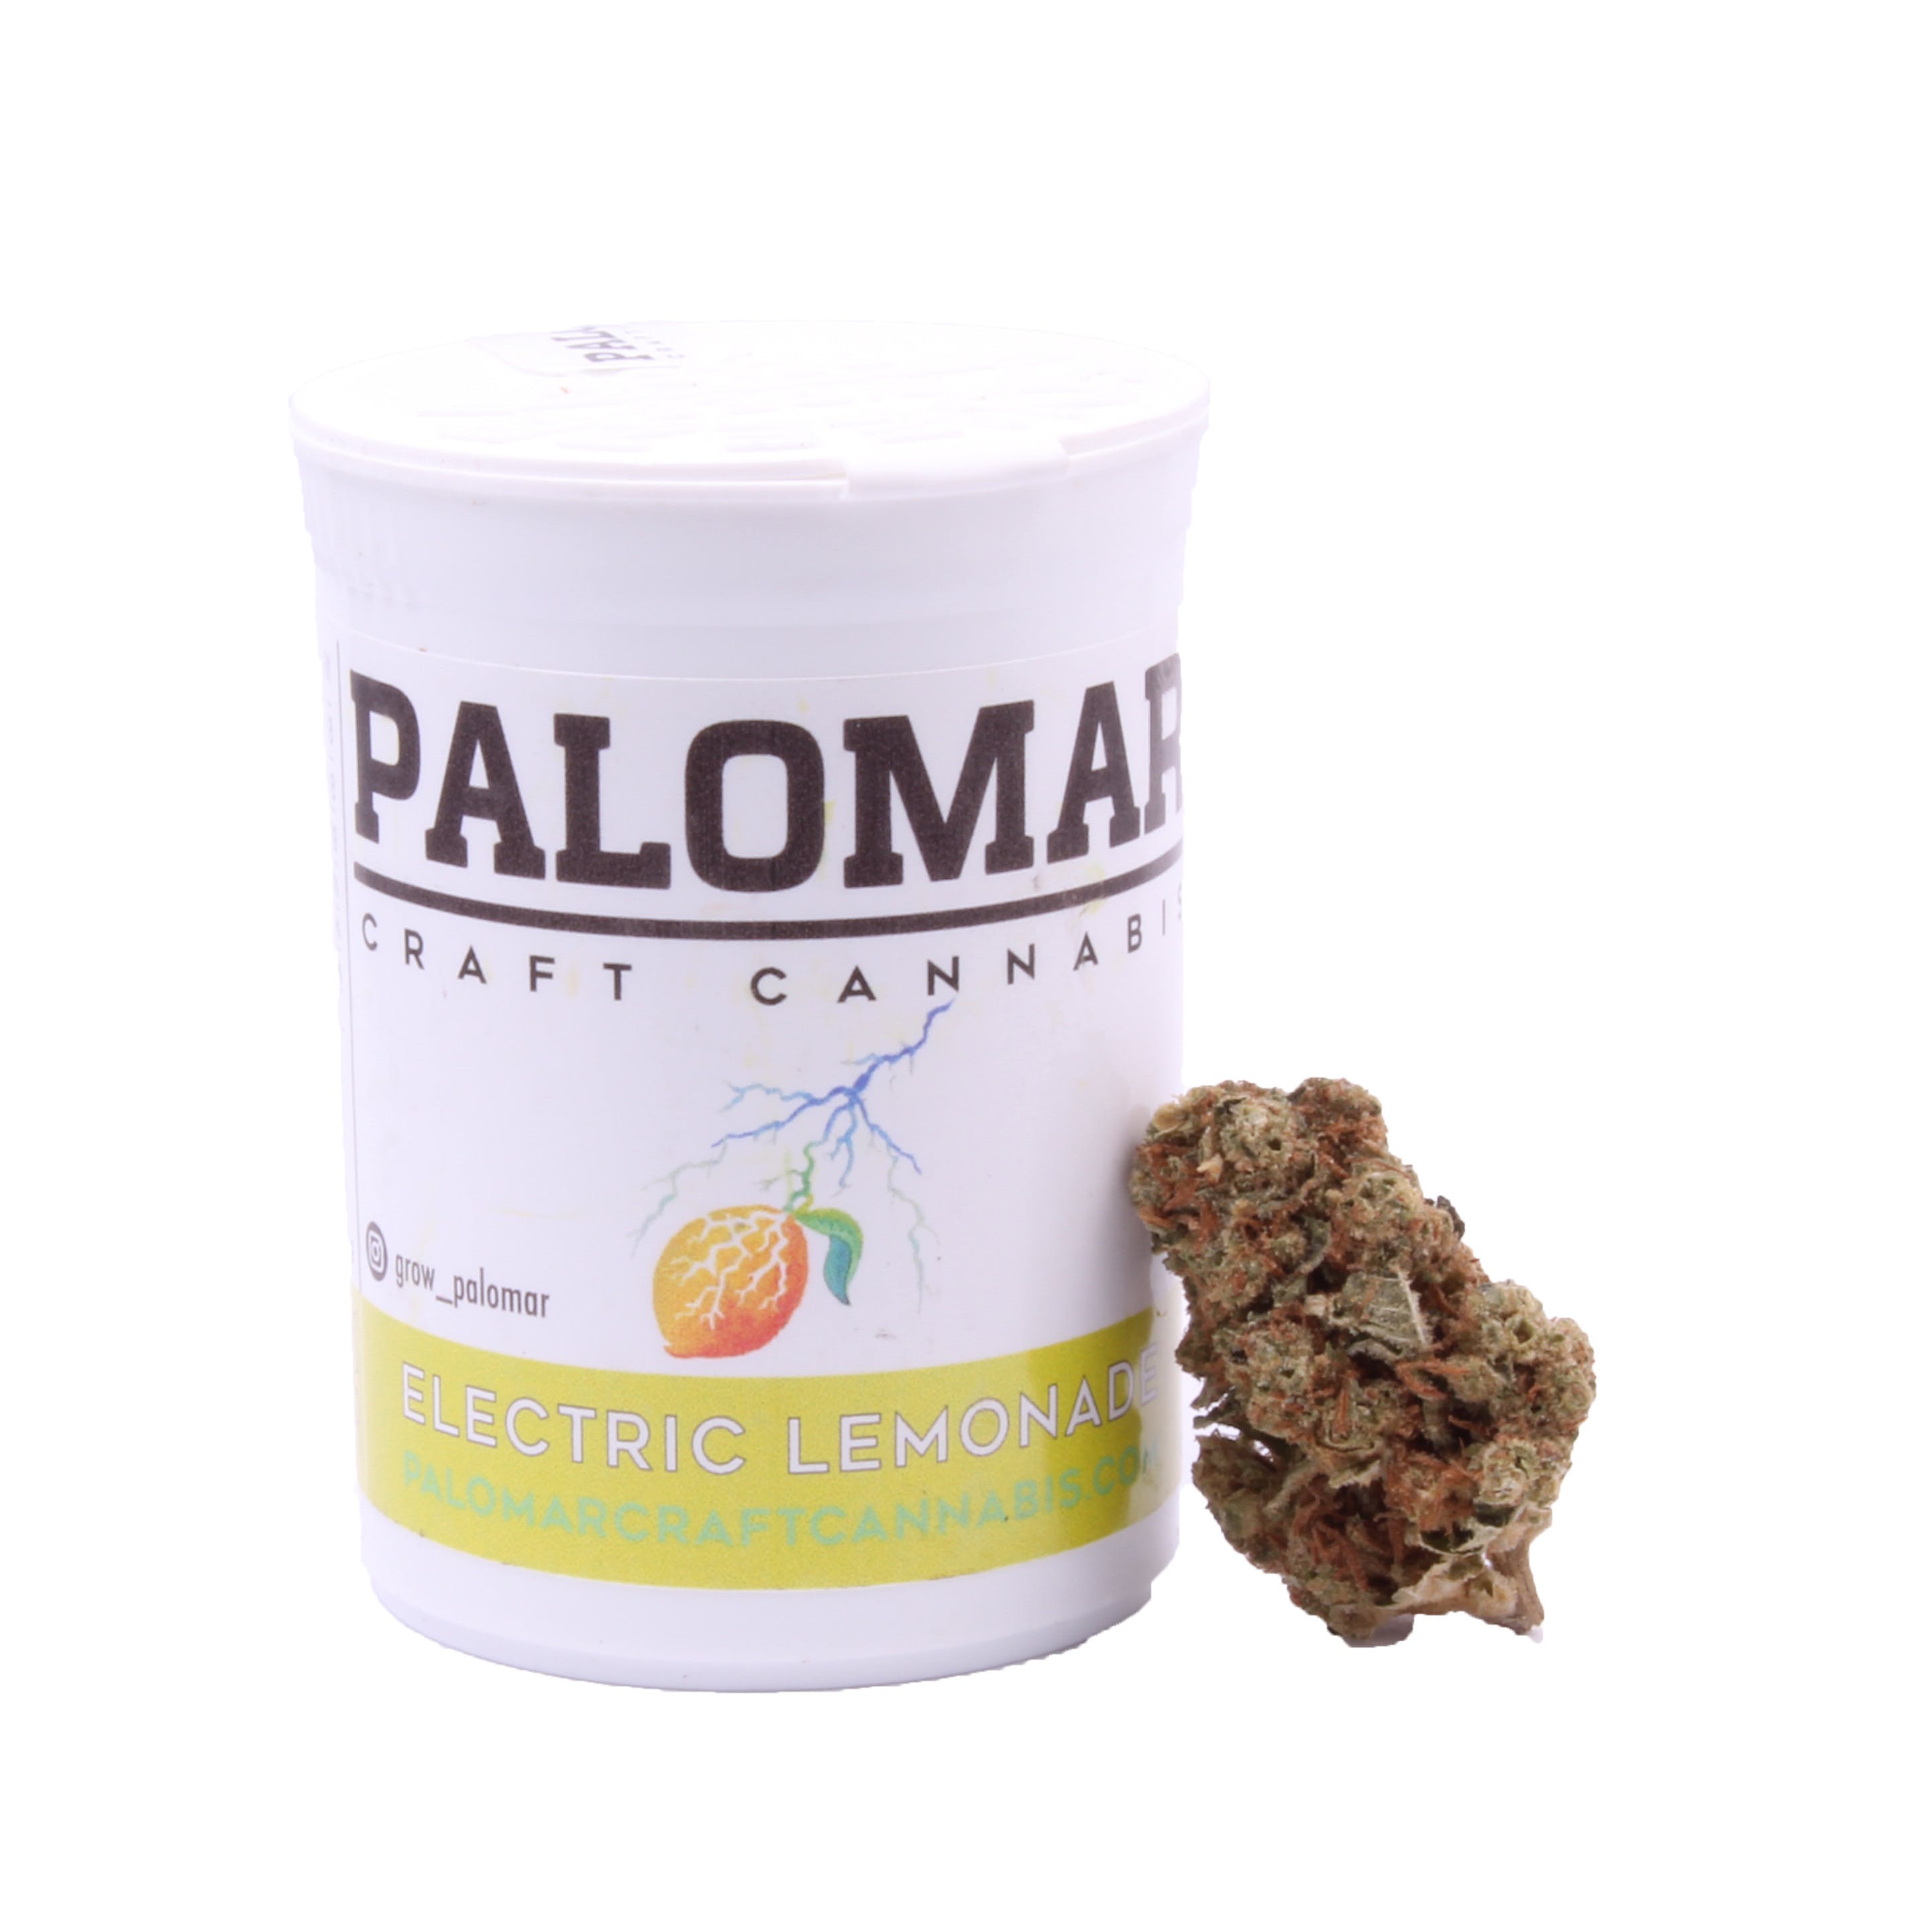 Palomar Craft Cannabis: Electric Lemonade - 16.70% THC